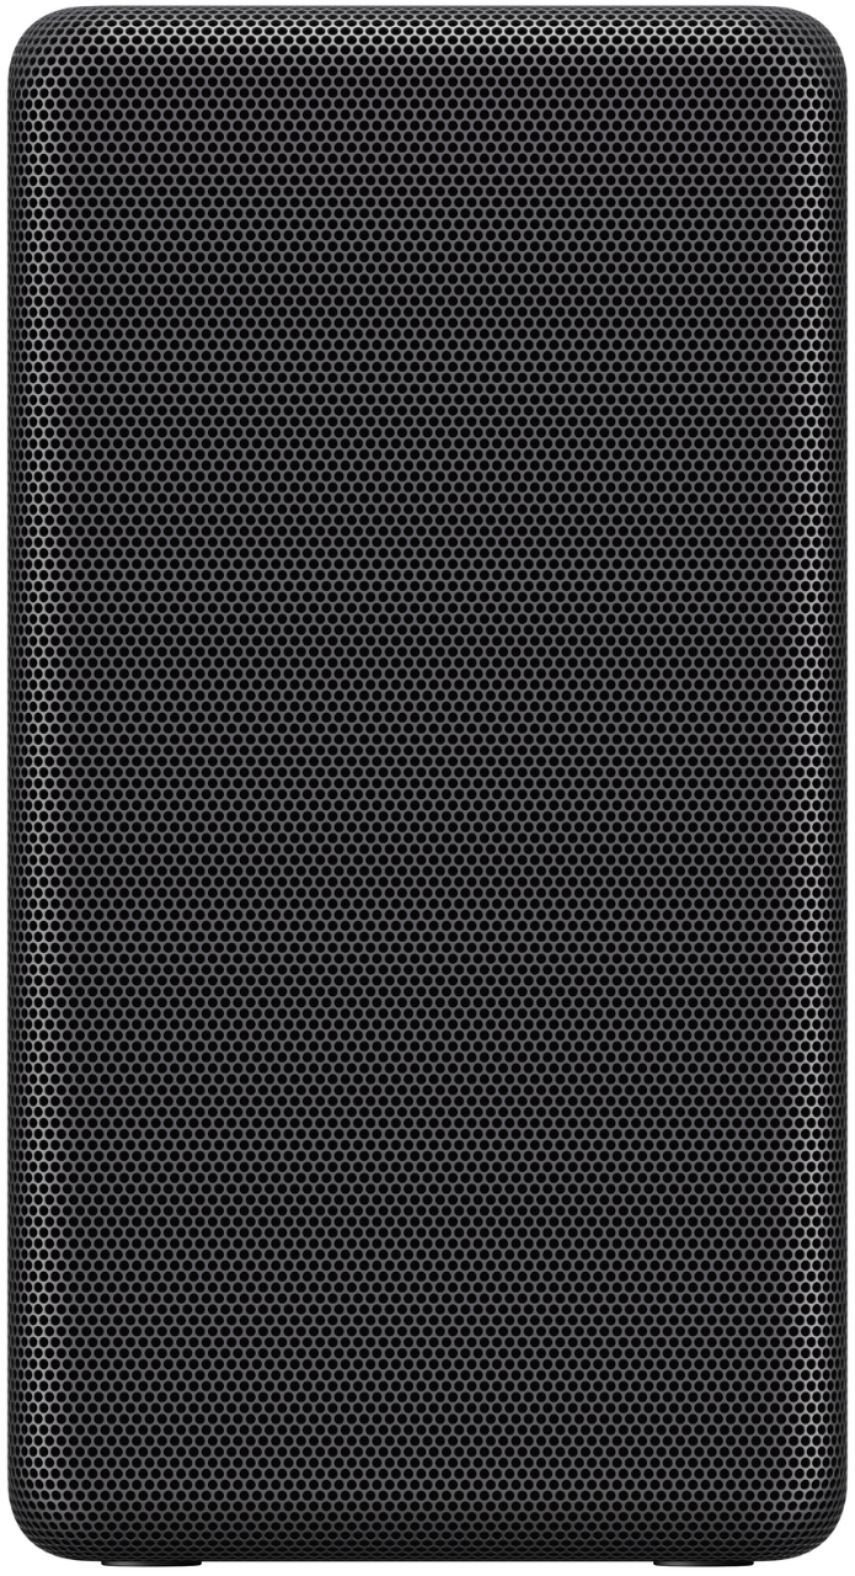 Sony SA-RS3S Black Wireless Speaker SARS3S - Best Rear Buy